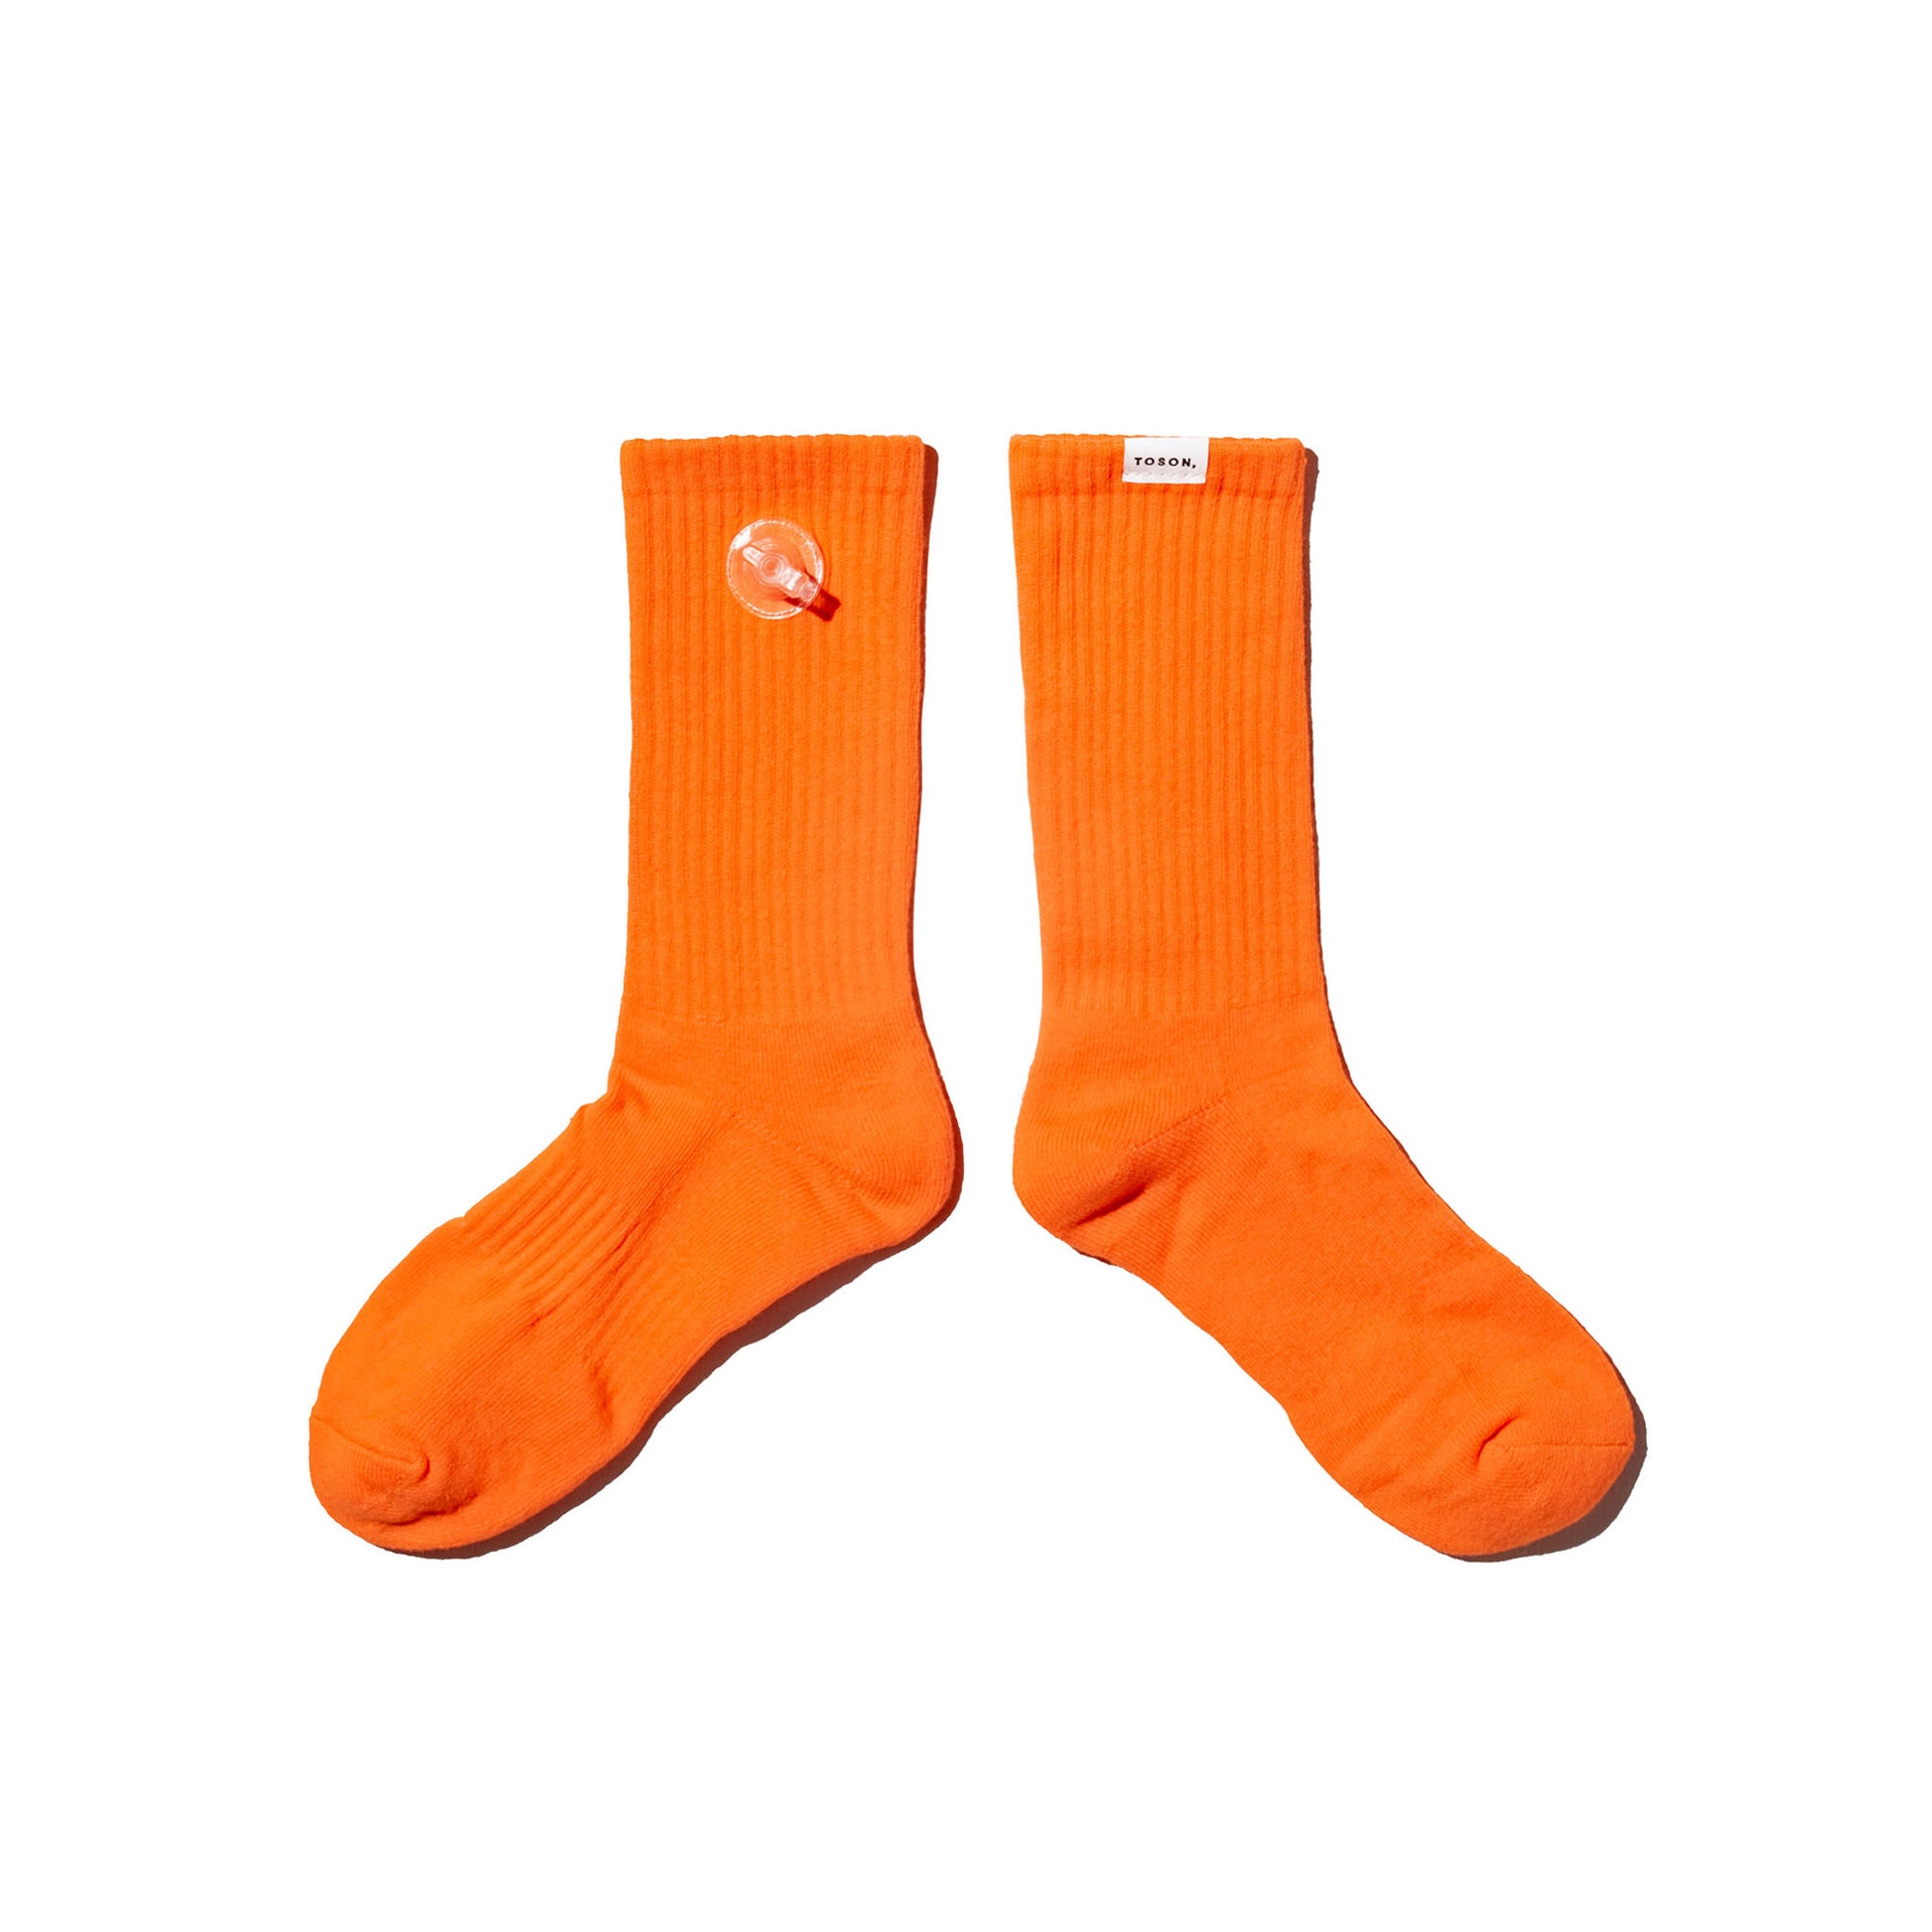 Toson, Inflatable Socks 2 Pack in Orange + Royal Blue